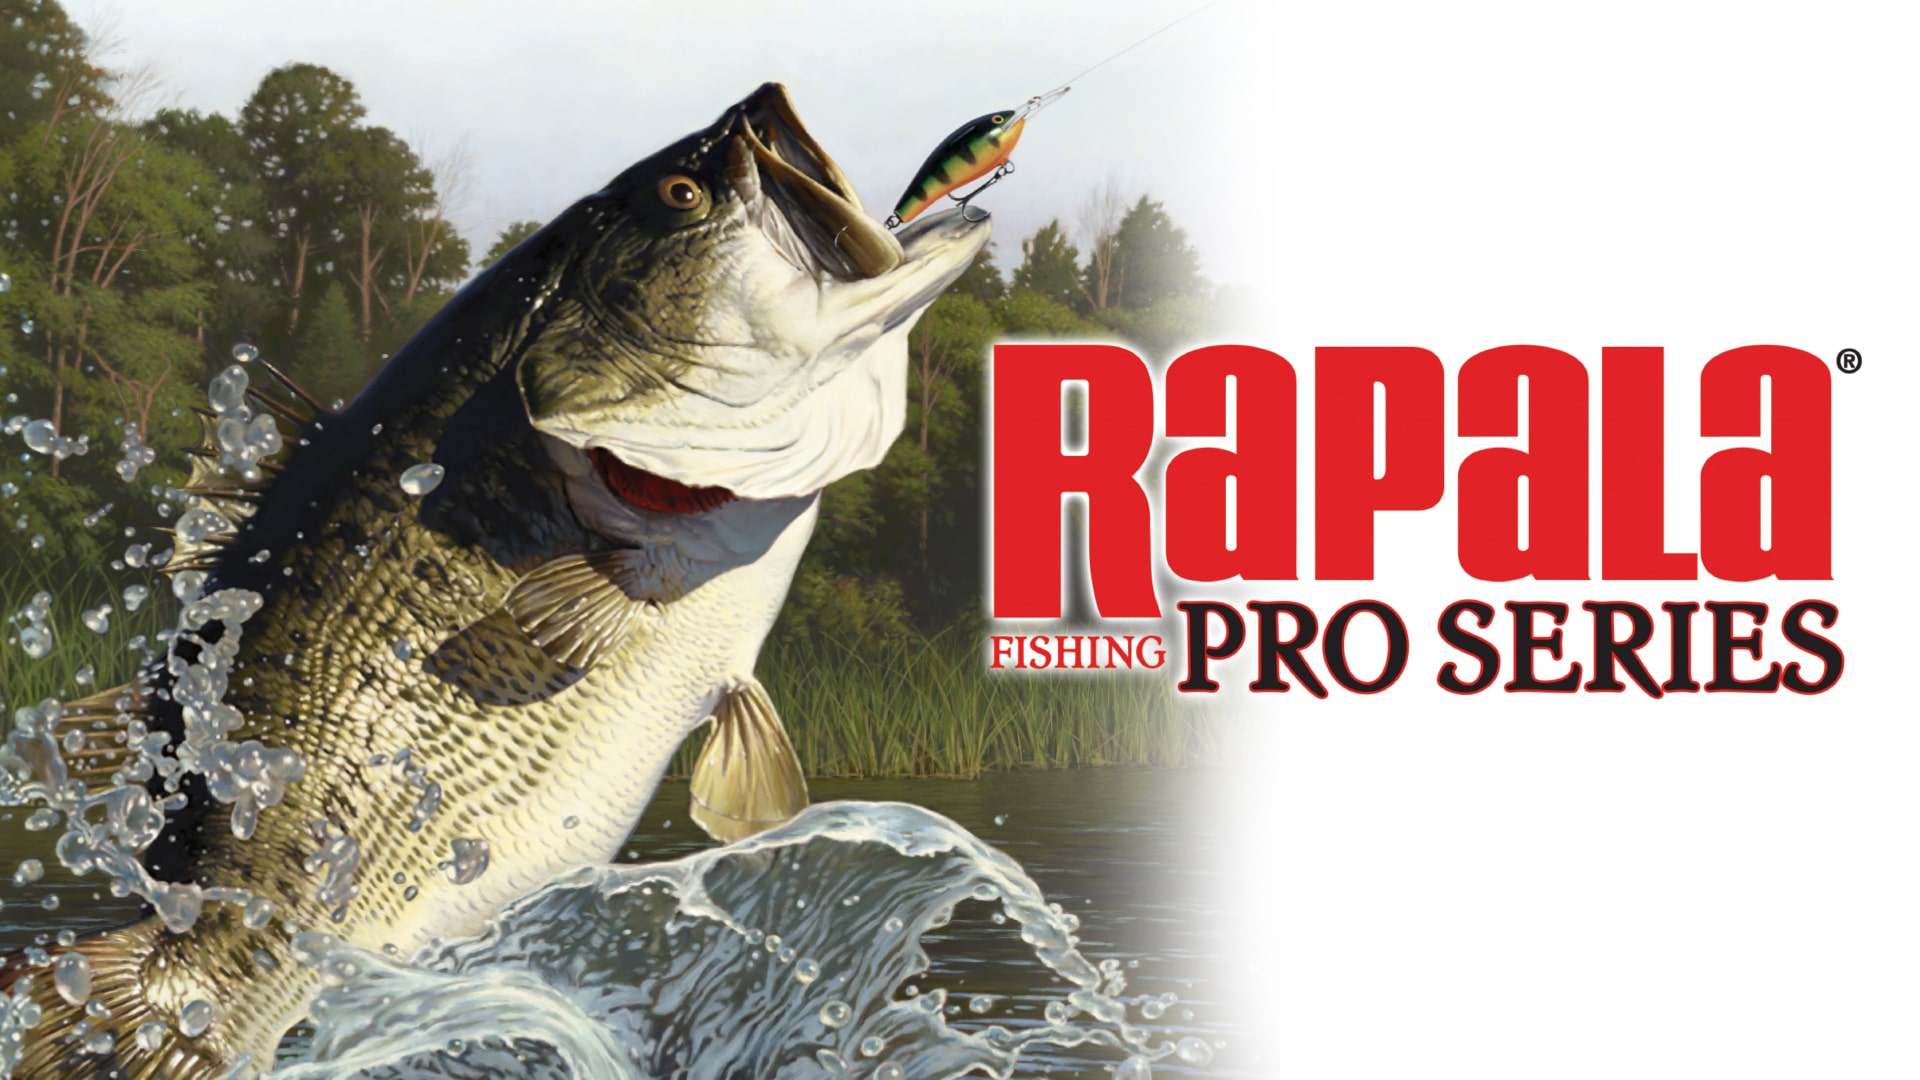 Rapala Fishing Pro Series: Lake Okeechobee Pack